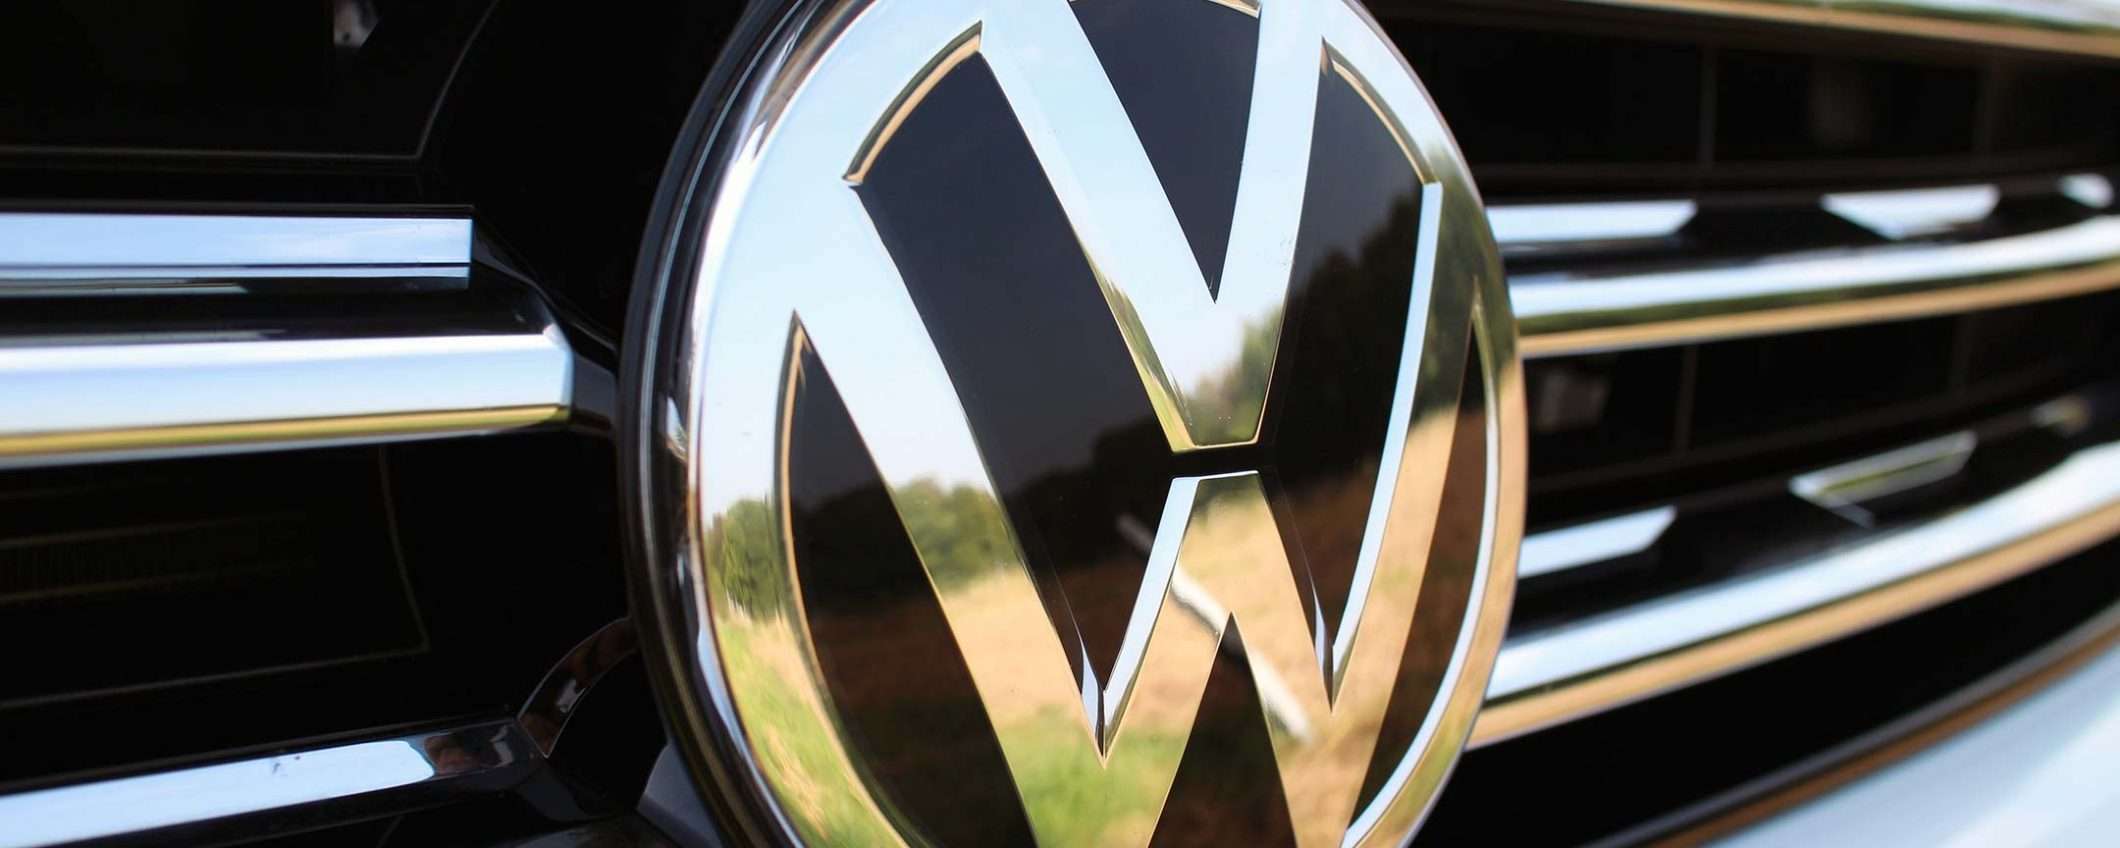 Guida autonoma: Volkswagen progetterà i propri chip